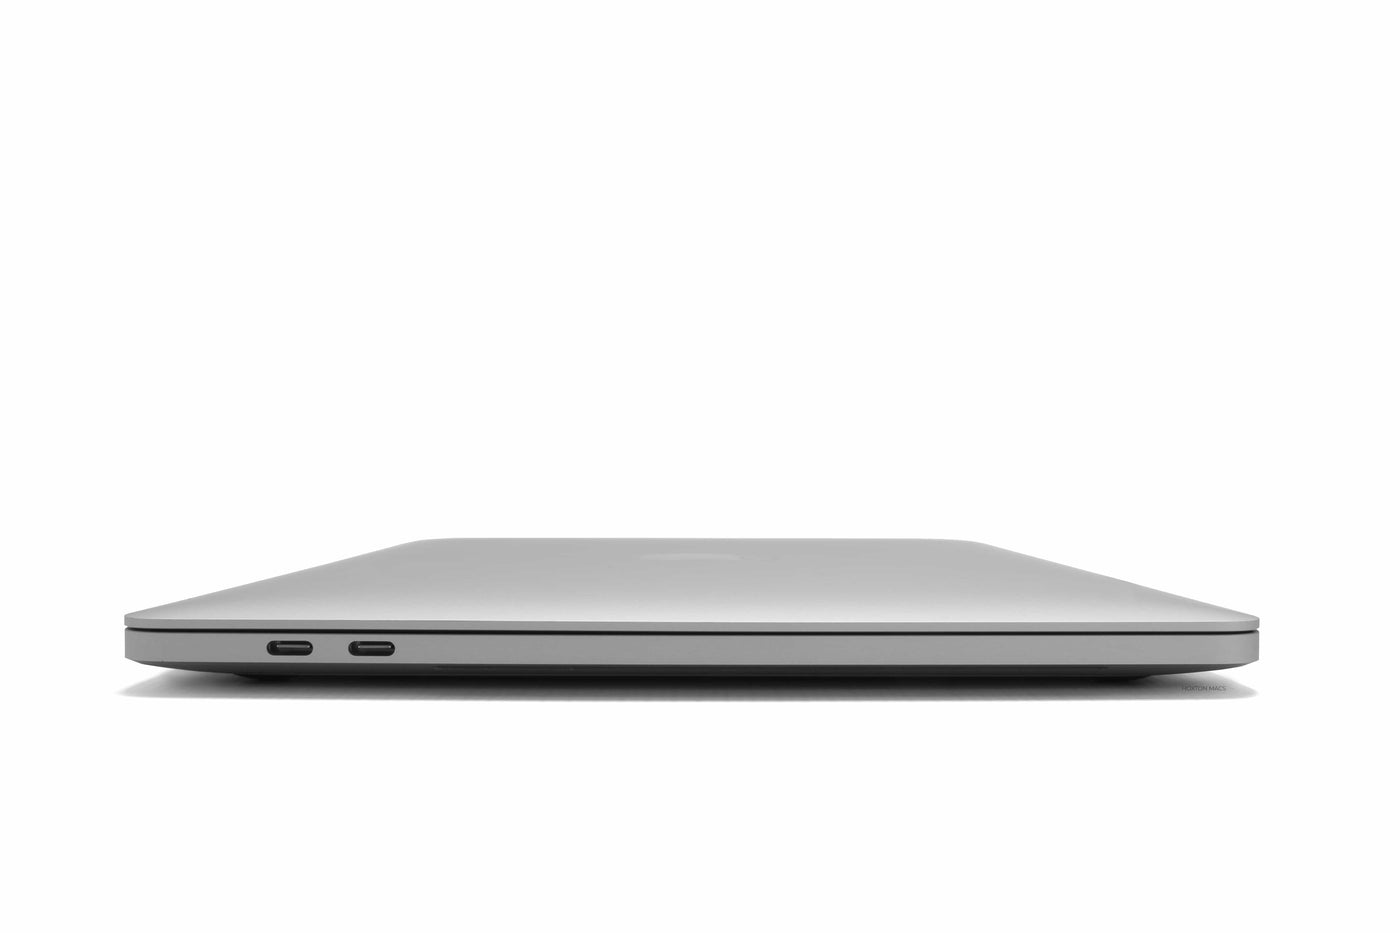 Apple MacBook Pro 13-inch MacBook Pro 13-inch M1 (Silver, 2020) - Good